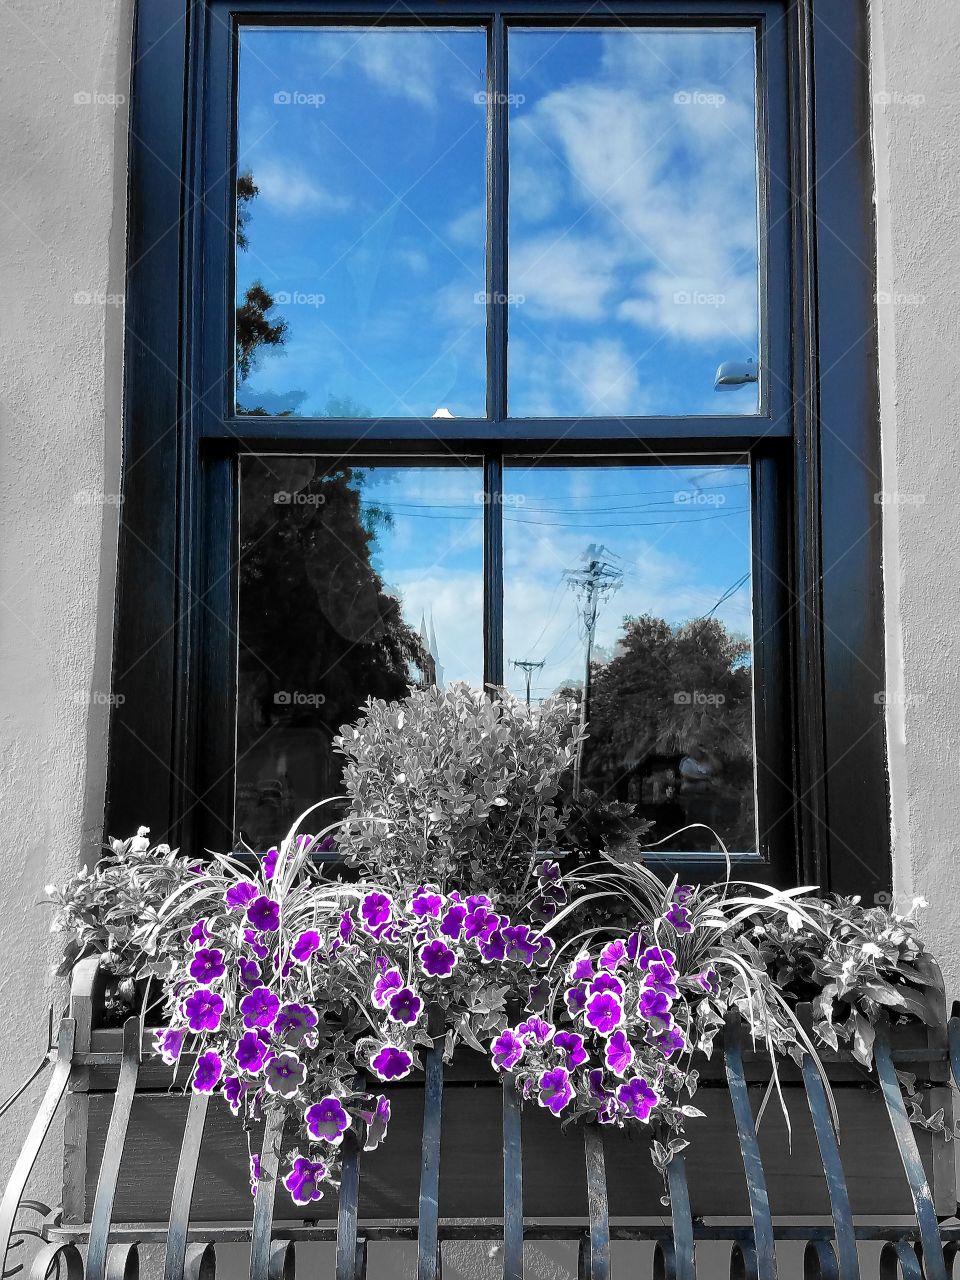 pansies by windowsill